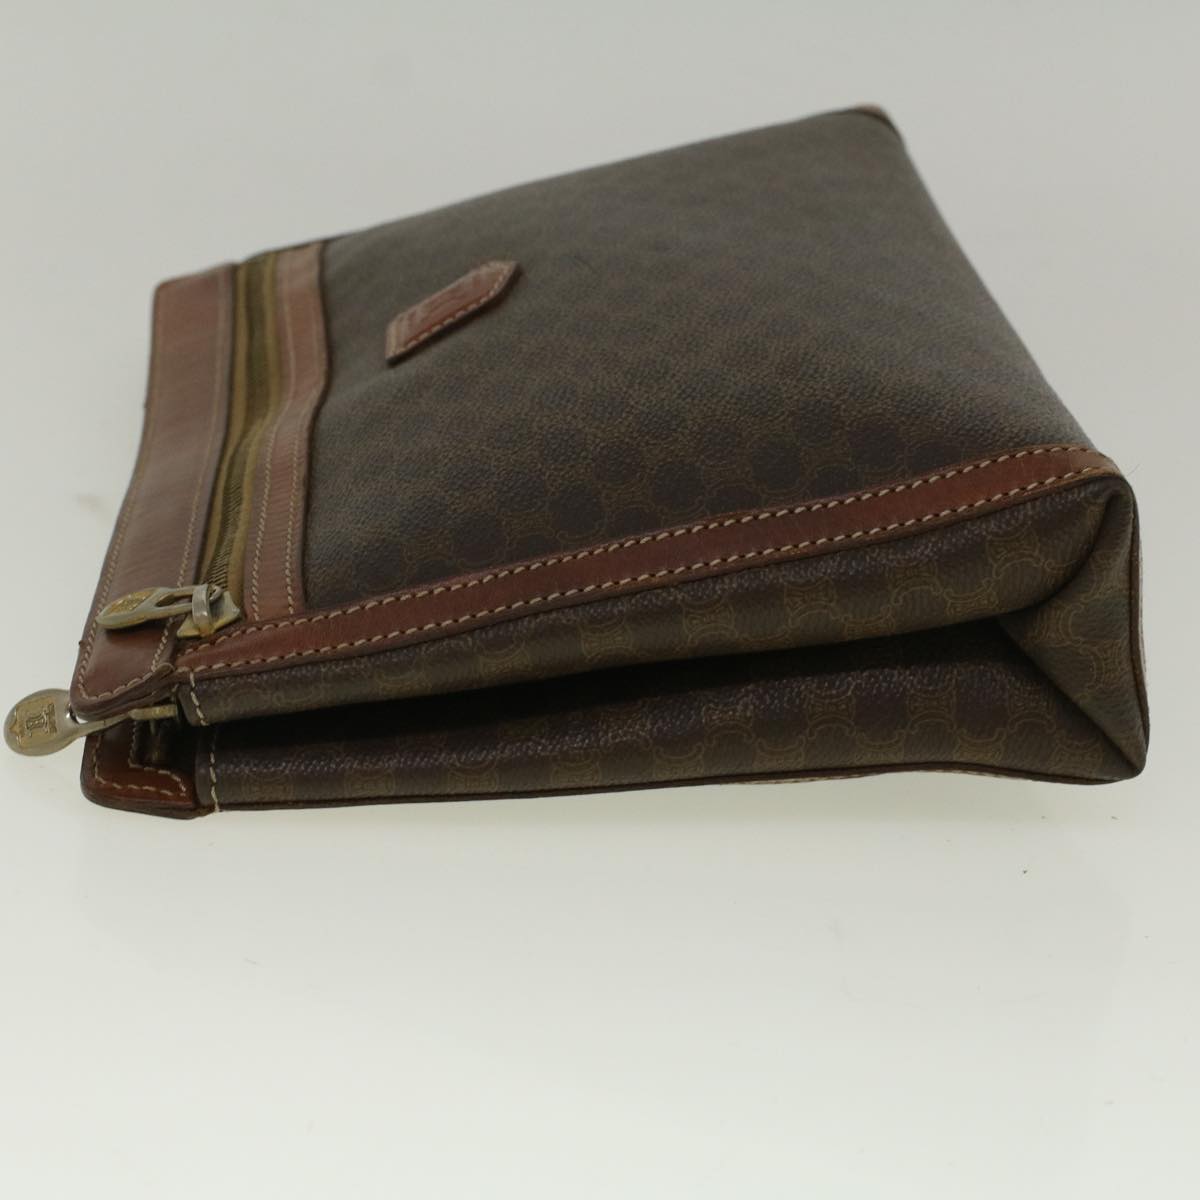 CELINE Macadam Canvas Clutch Bag PVC Leather Brown Auth 58407